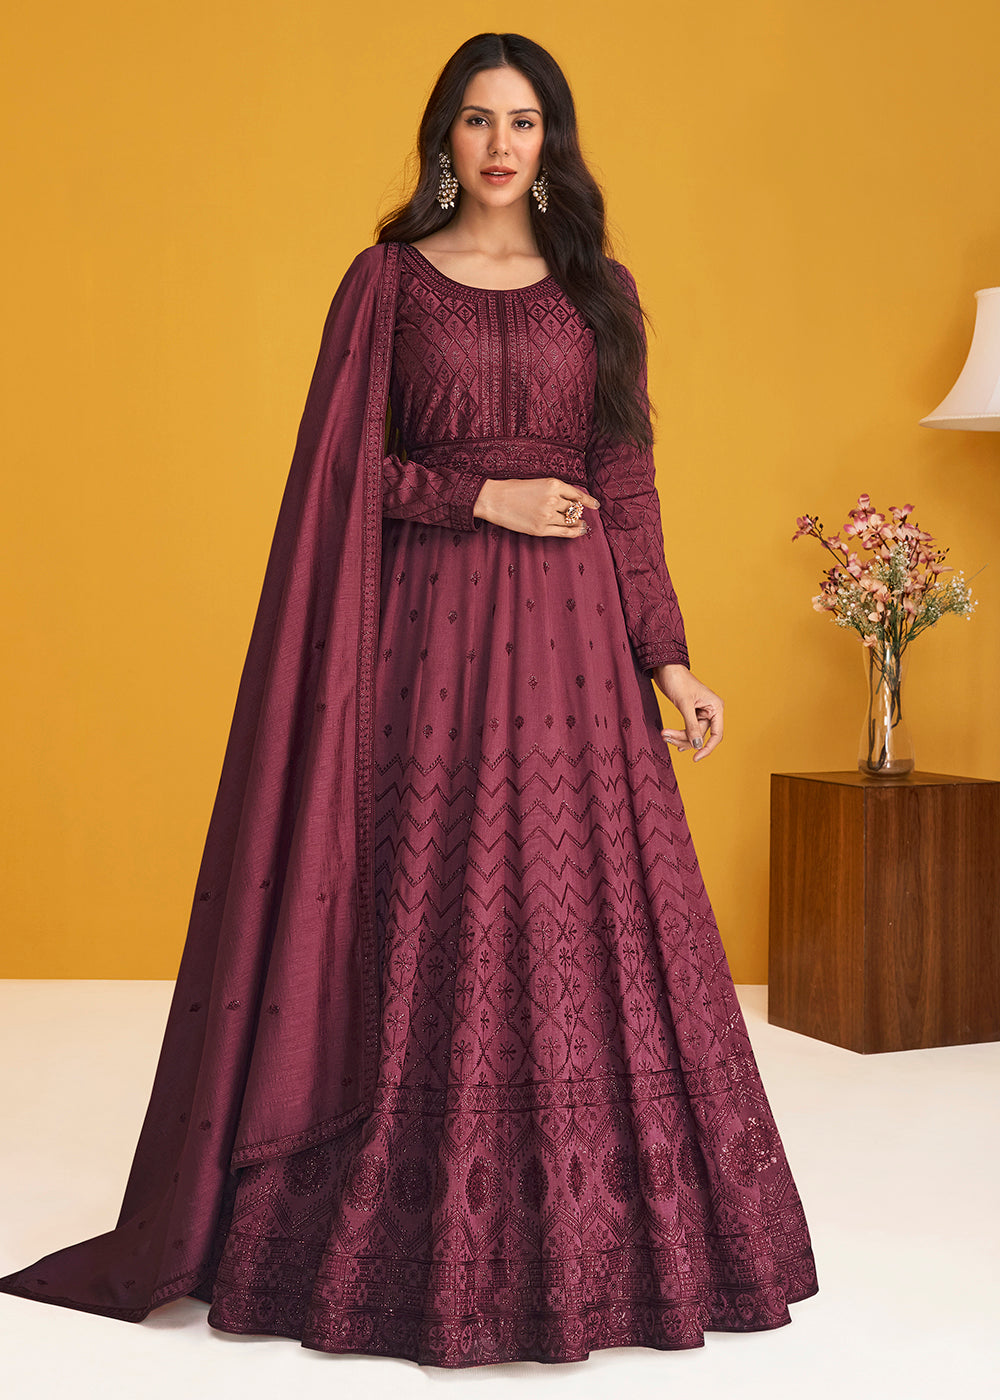 Buy Now Premium Silk Deep Wine Embroidered Wedding Anarkali Suit Online in USA, UK, Australia, New Zealand, Canada & Worldwide at Empress Clothing.